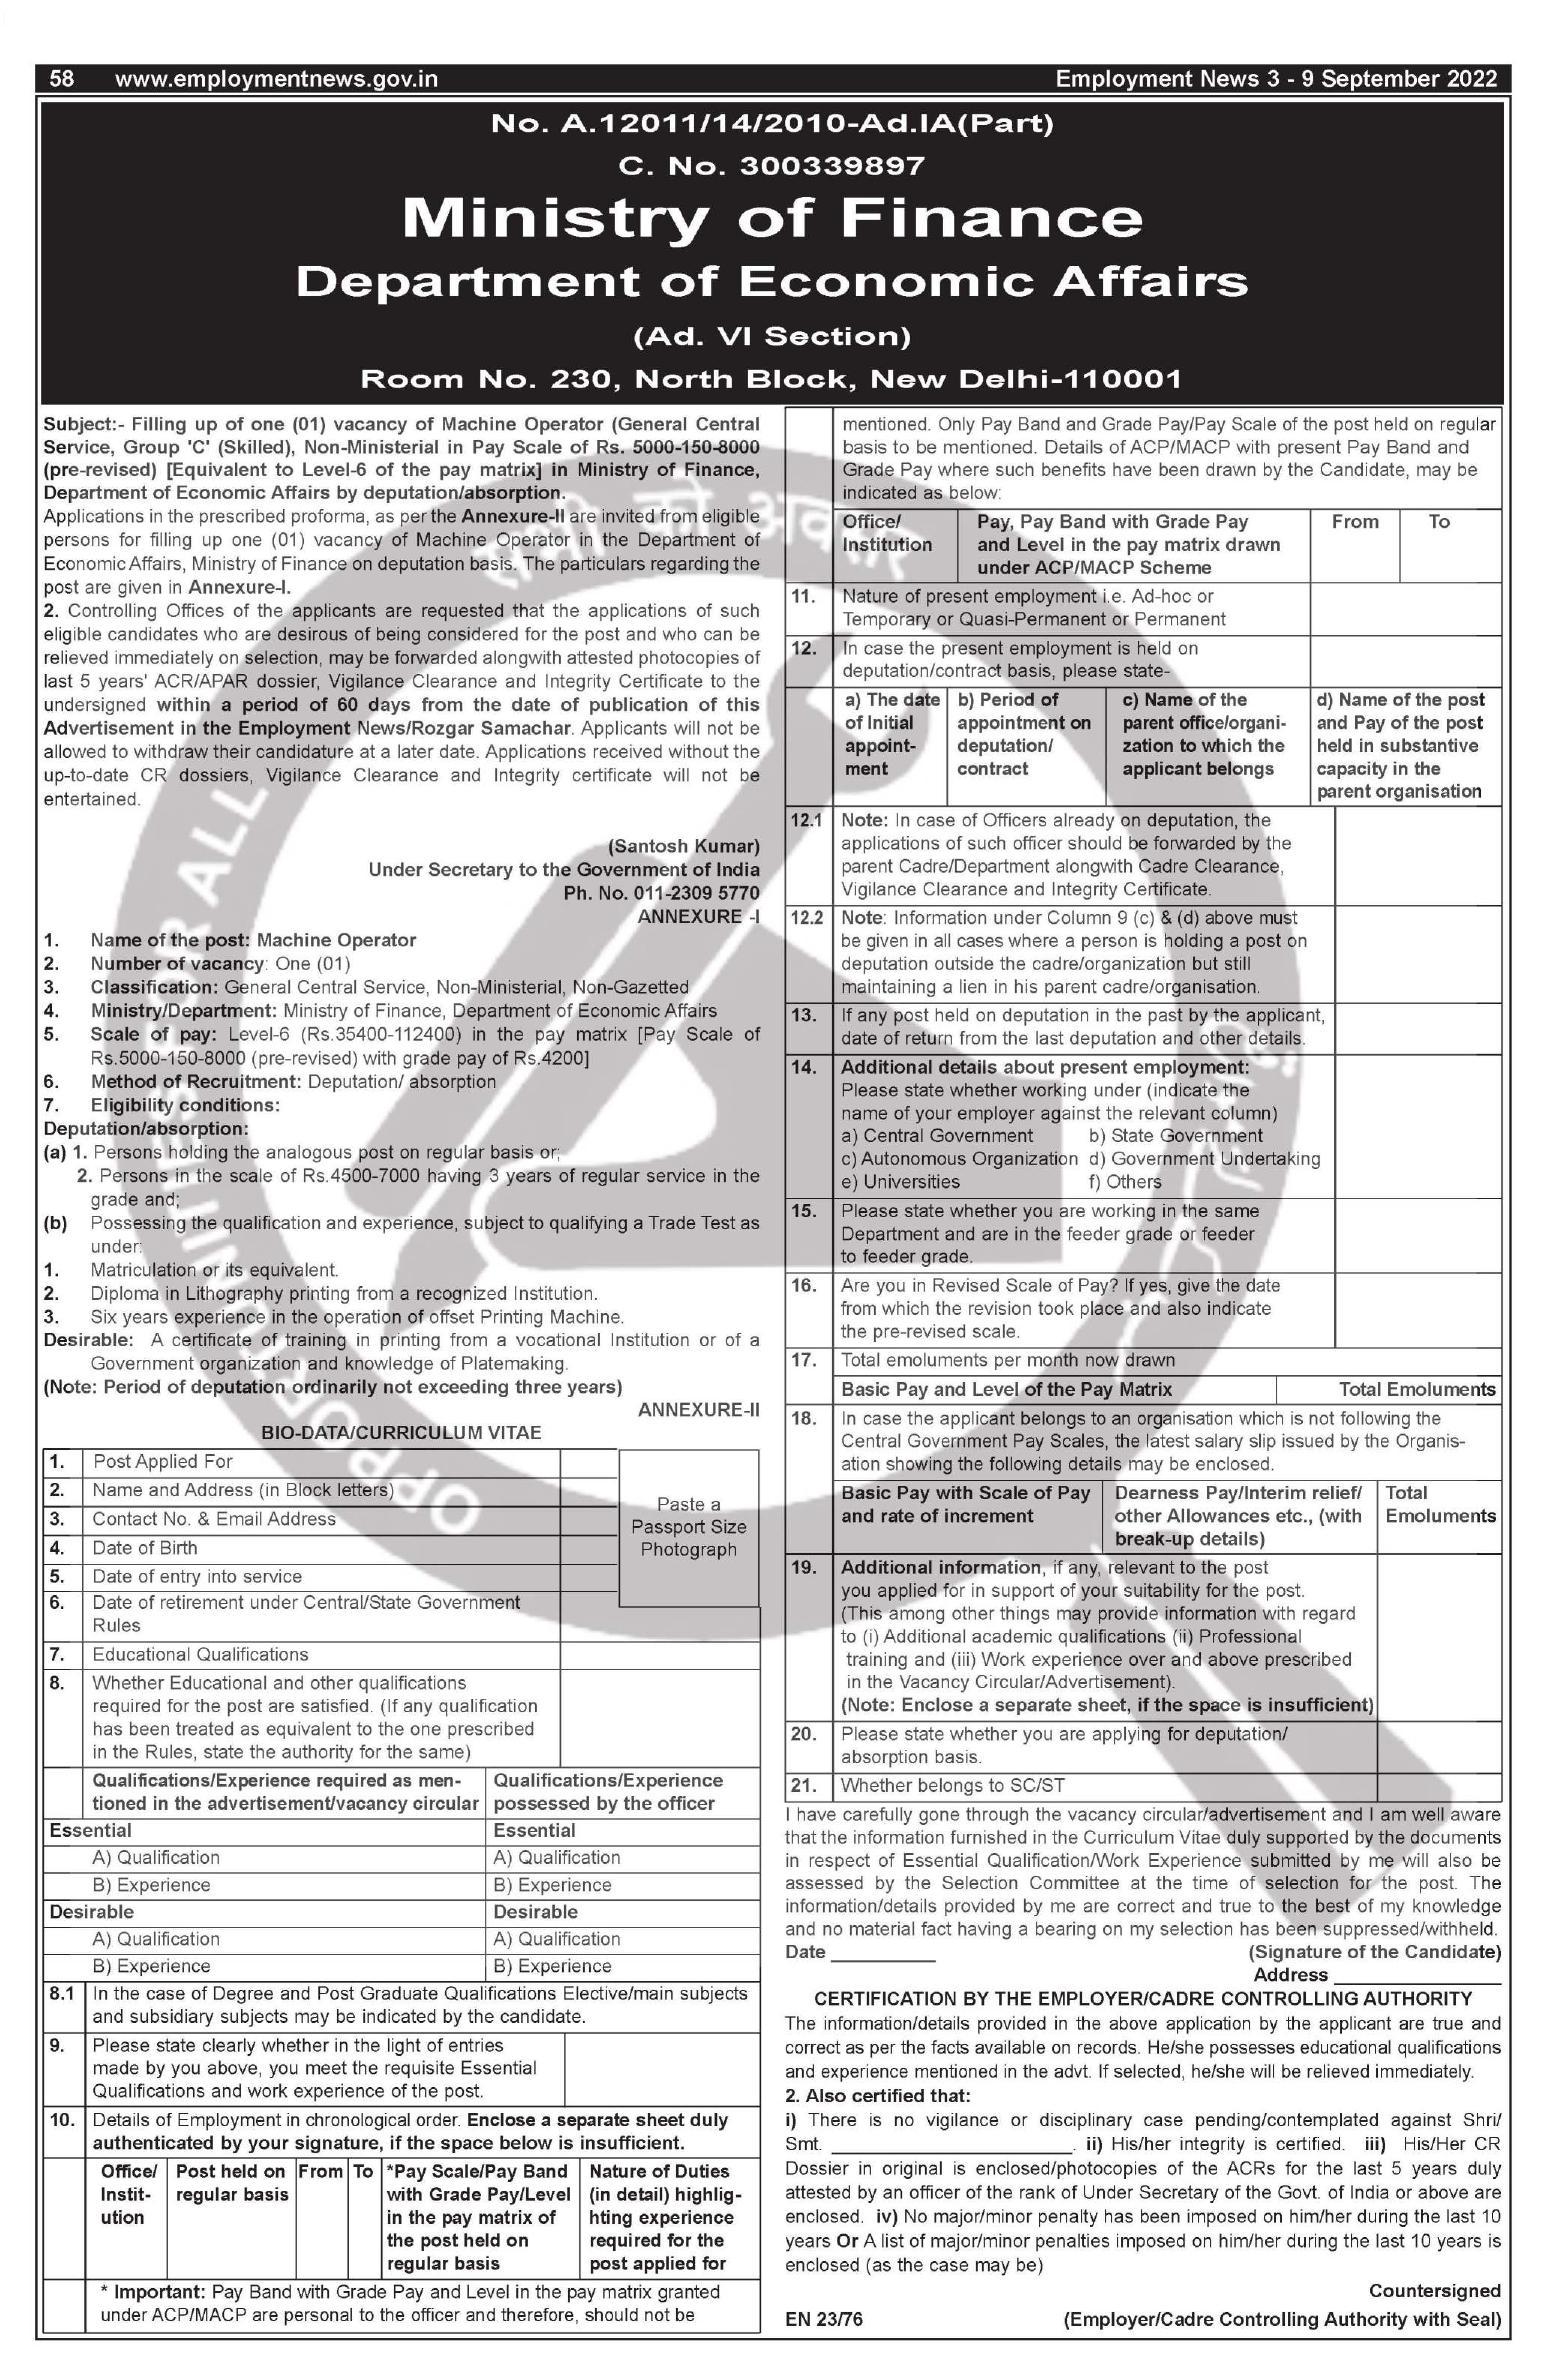 Department Of Economic Affairs Machine Operator Recruitment 2022 - Page 1